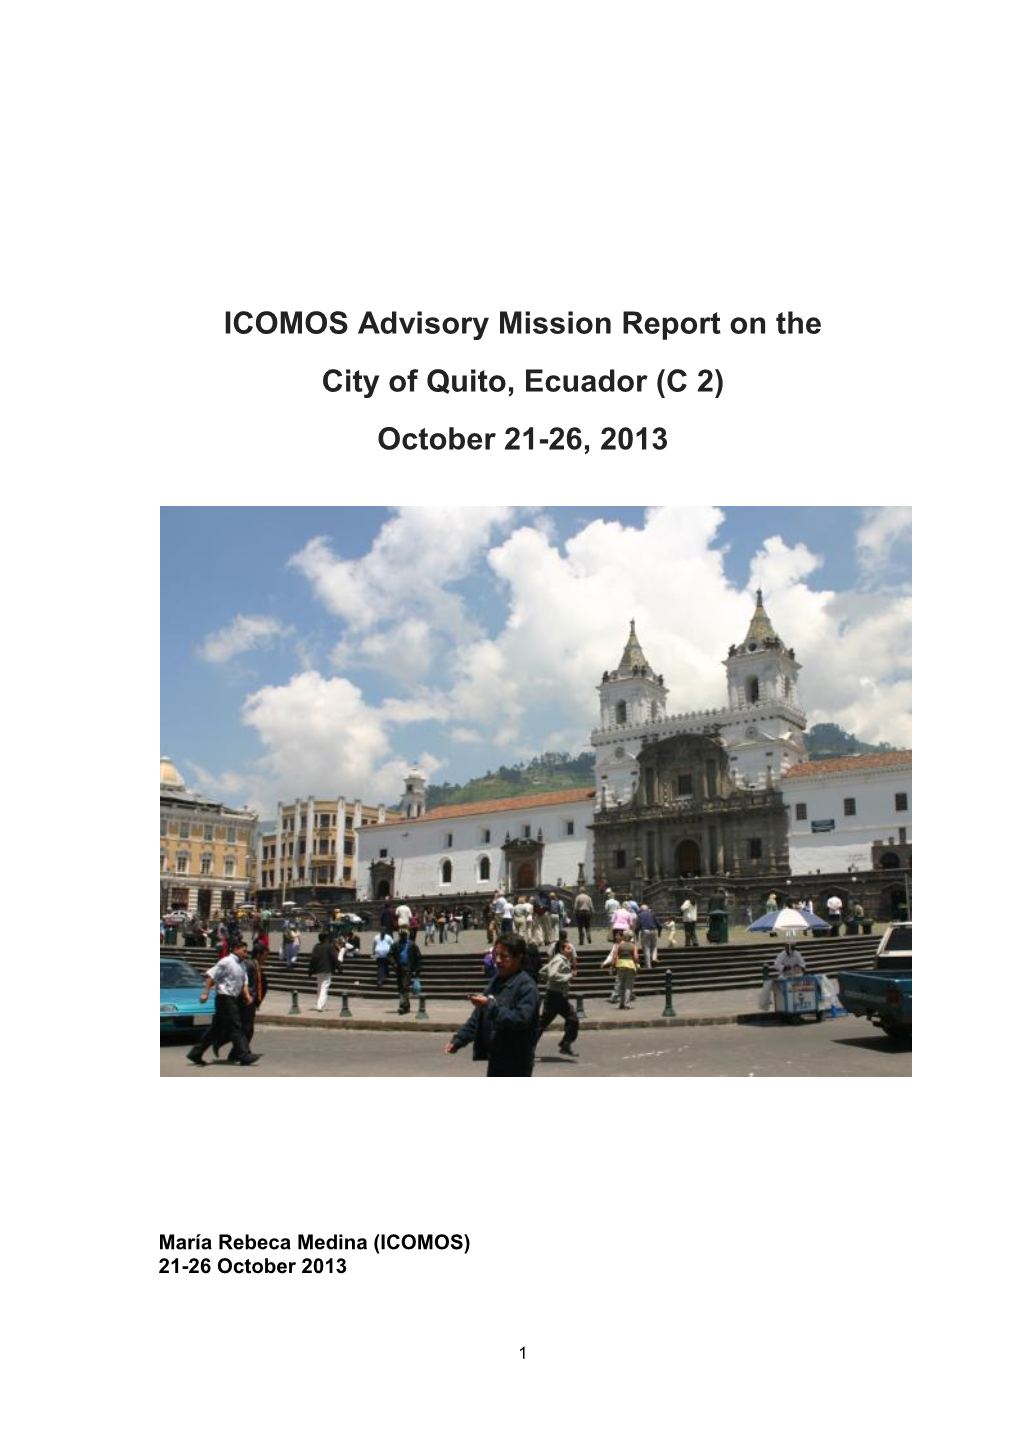 ICOMOS Advisory Mission Report on the City of Quito, Ecuador (C 2) October 21-26, 2013